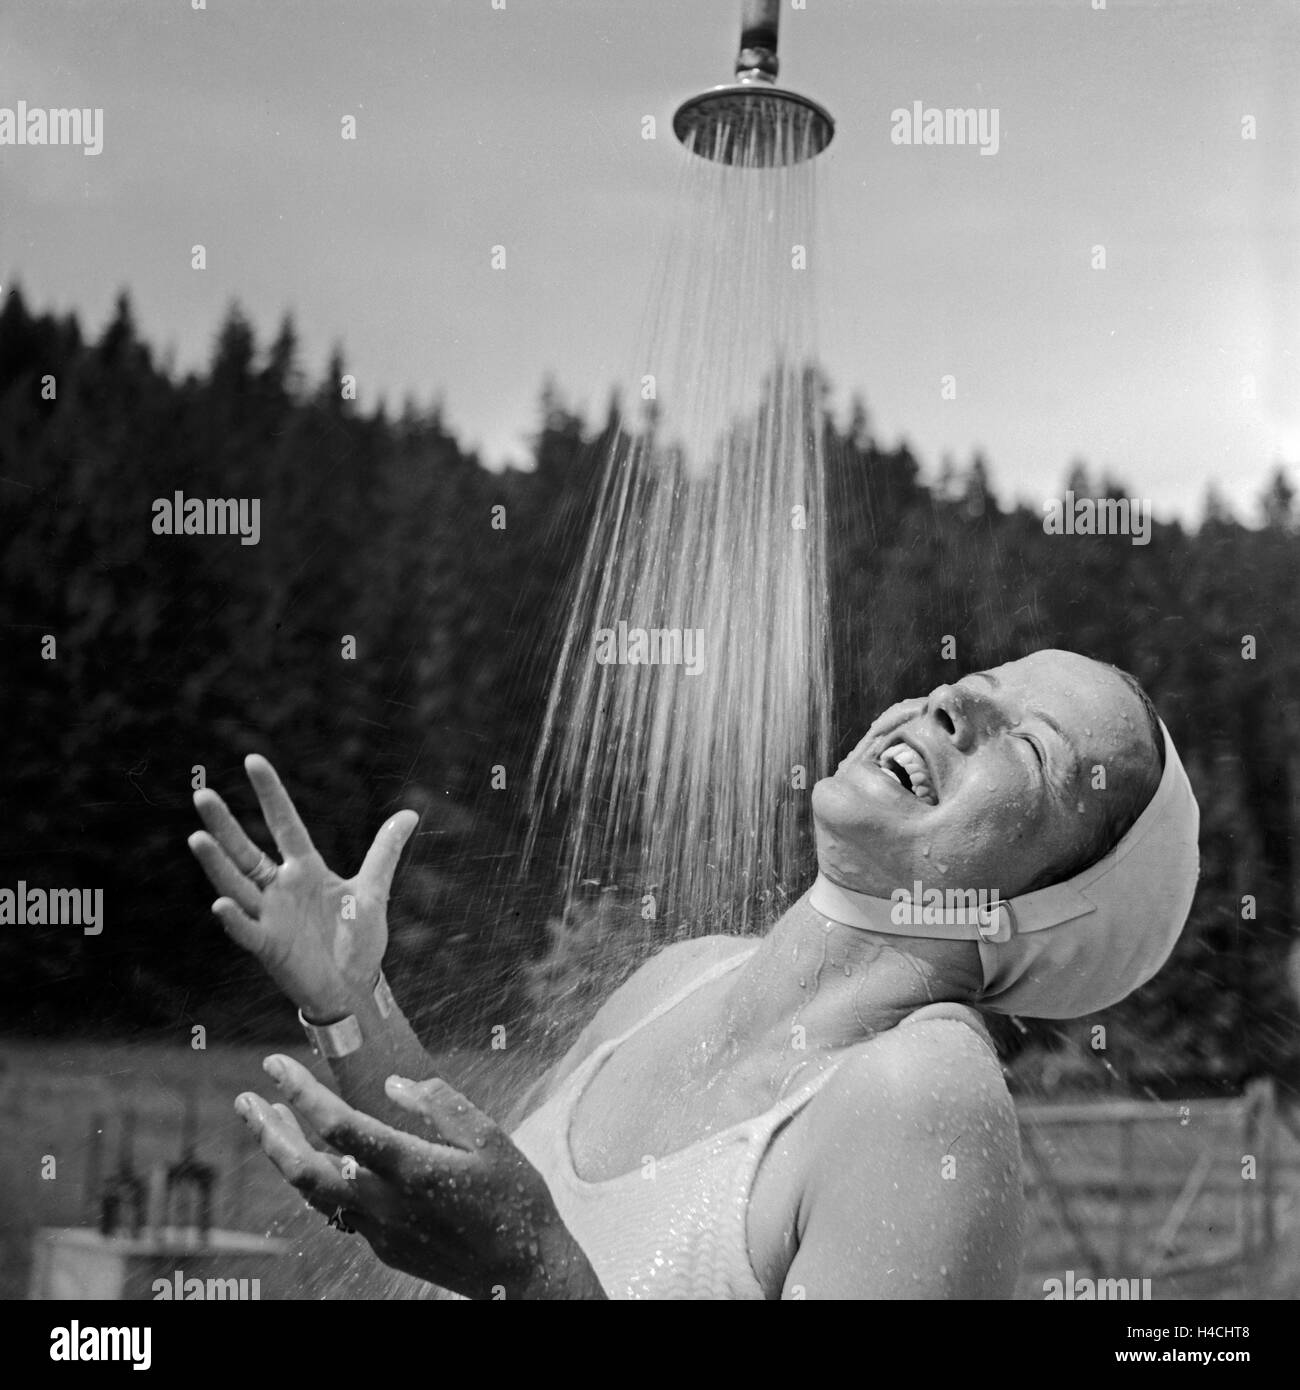 Eine junge Frau nimmt eine kalte Dusche en einem Freibad im Schwarzwald, Deutschland 1930er Jahre. Una joven mujer disfrutando de una ducha fría en una piscina al aire libre en la Selva Negra, Alemania 1930. Foto de stock